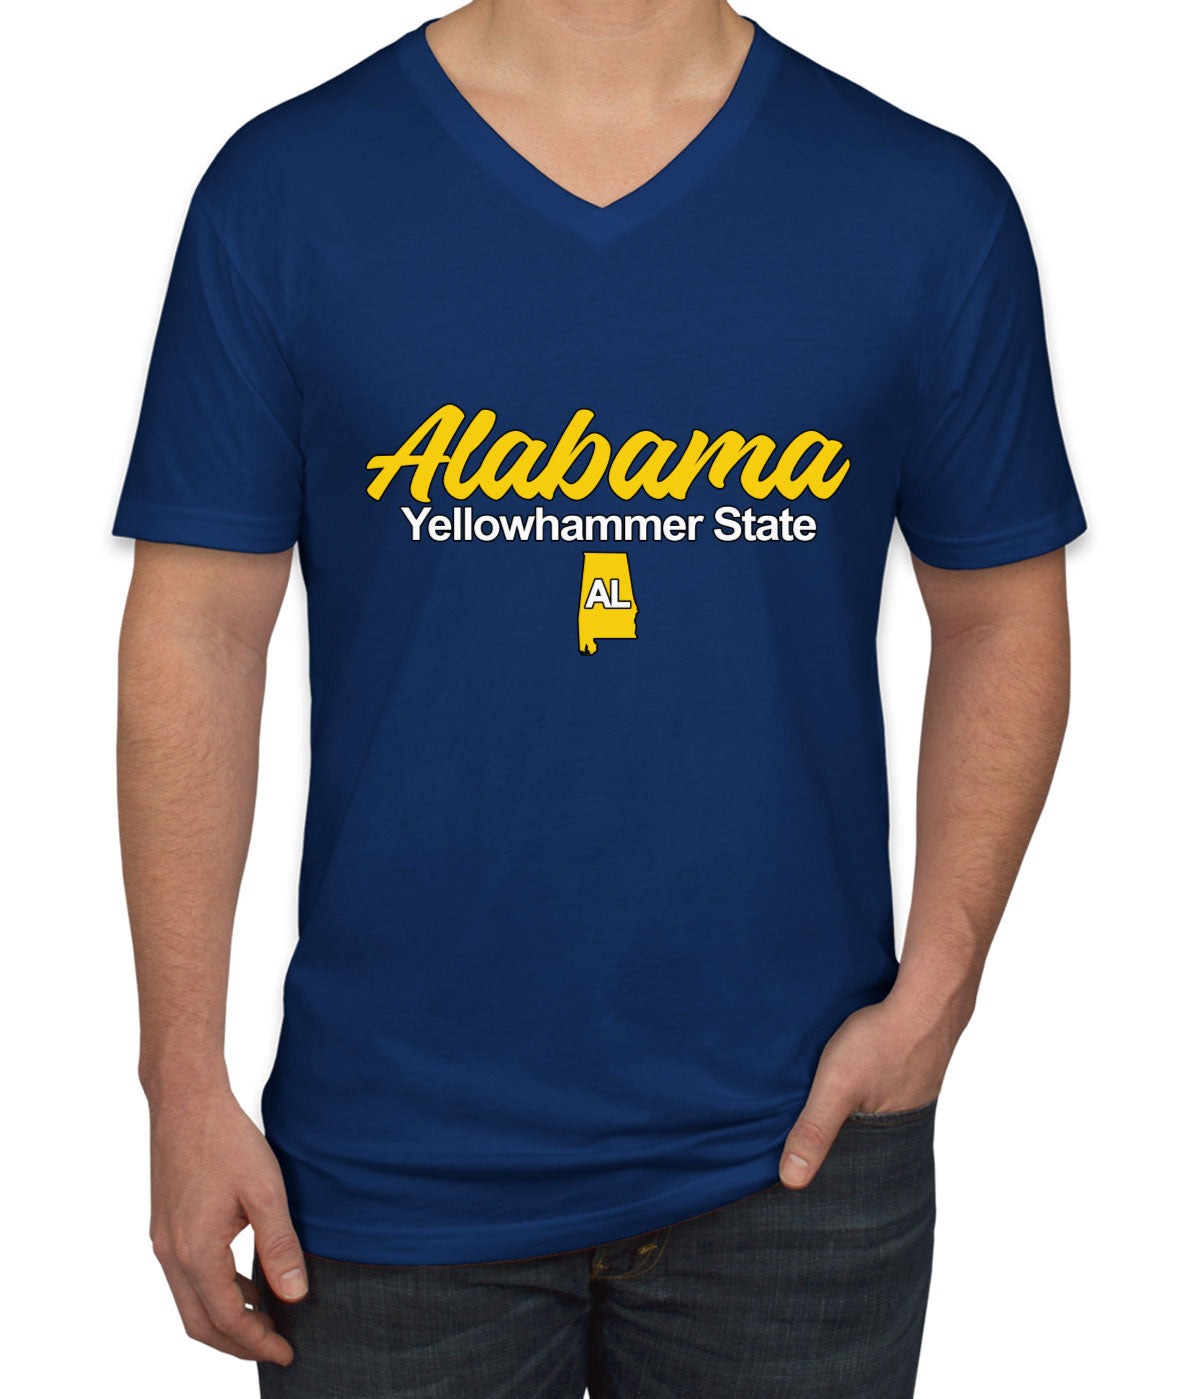 Alabama Yellowhammer State Men's V Neck T-shirt